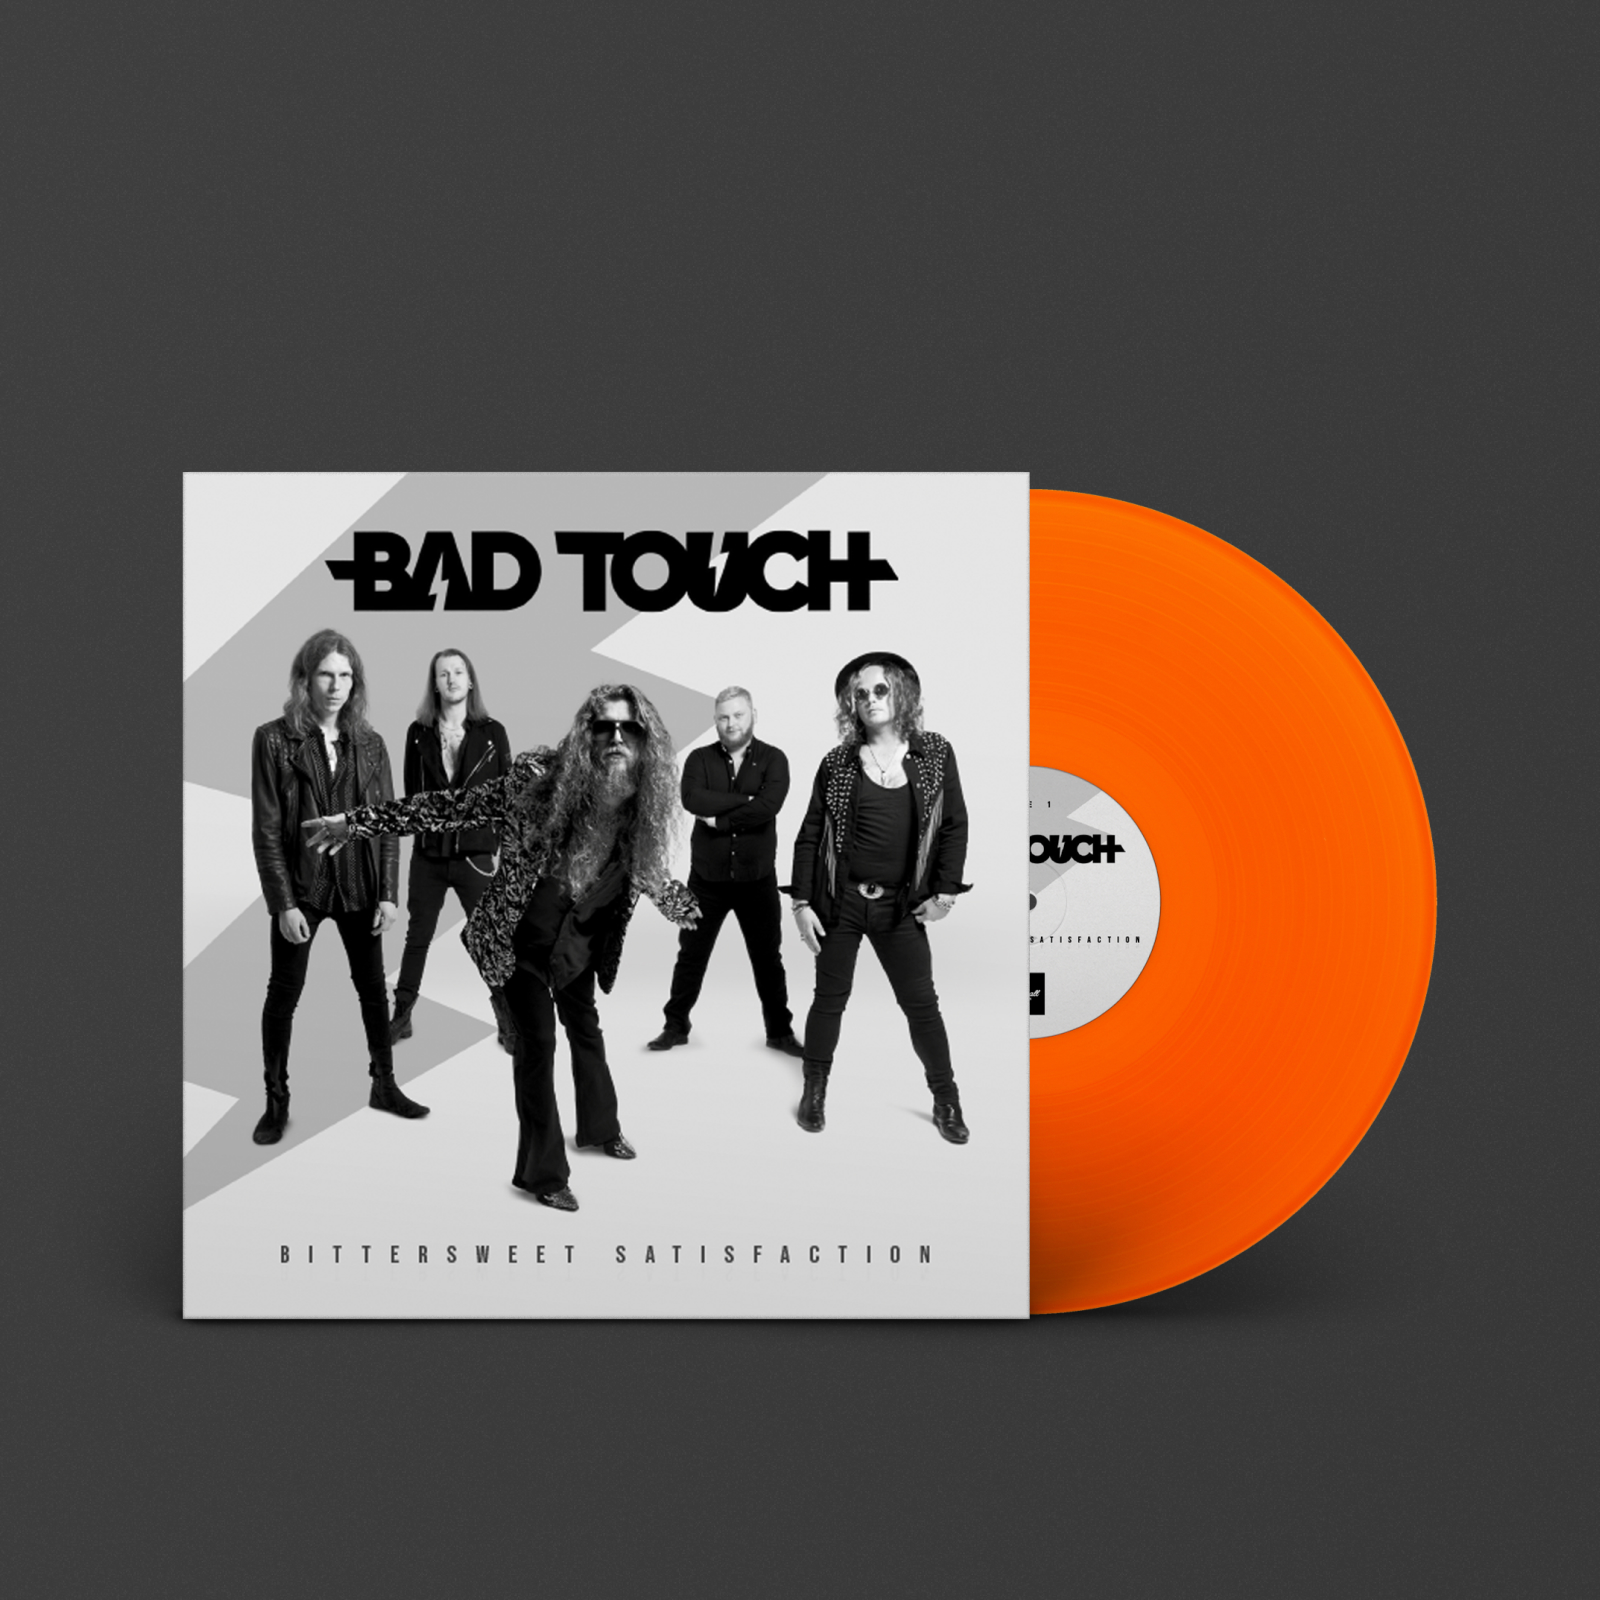 LP BITTERSWEET SATISFACTION producido por Marshall con fondo negro oscuro e impactante diseño "Bad Touch Orange".